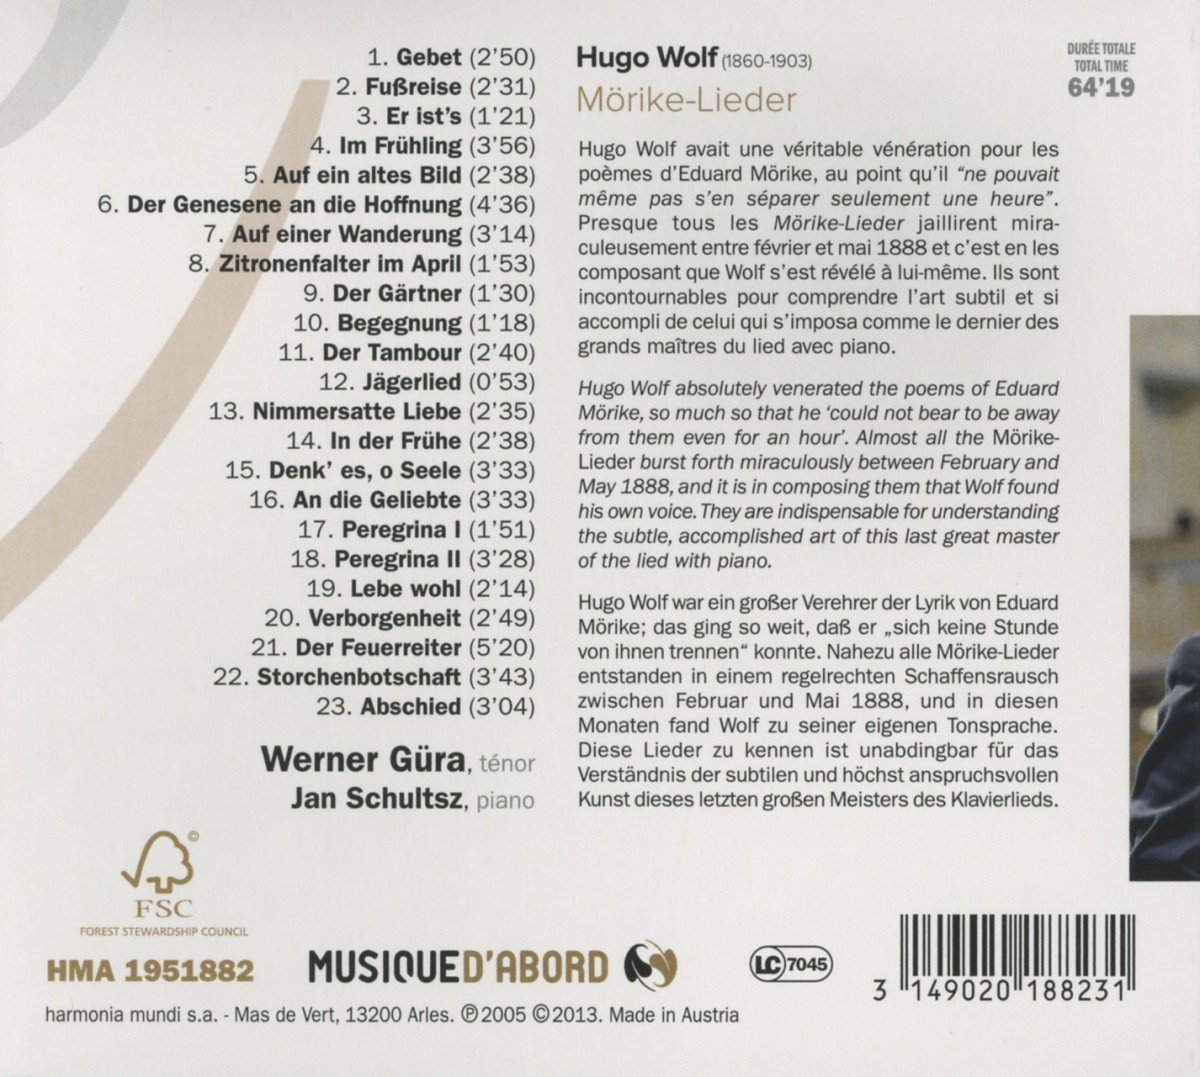 Werner Gura on Harmonia Mundi,the Morike-Lieder of Hugo Wolf